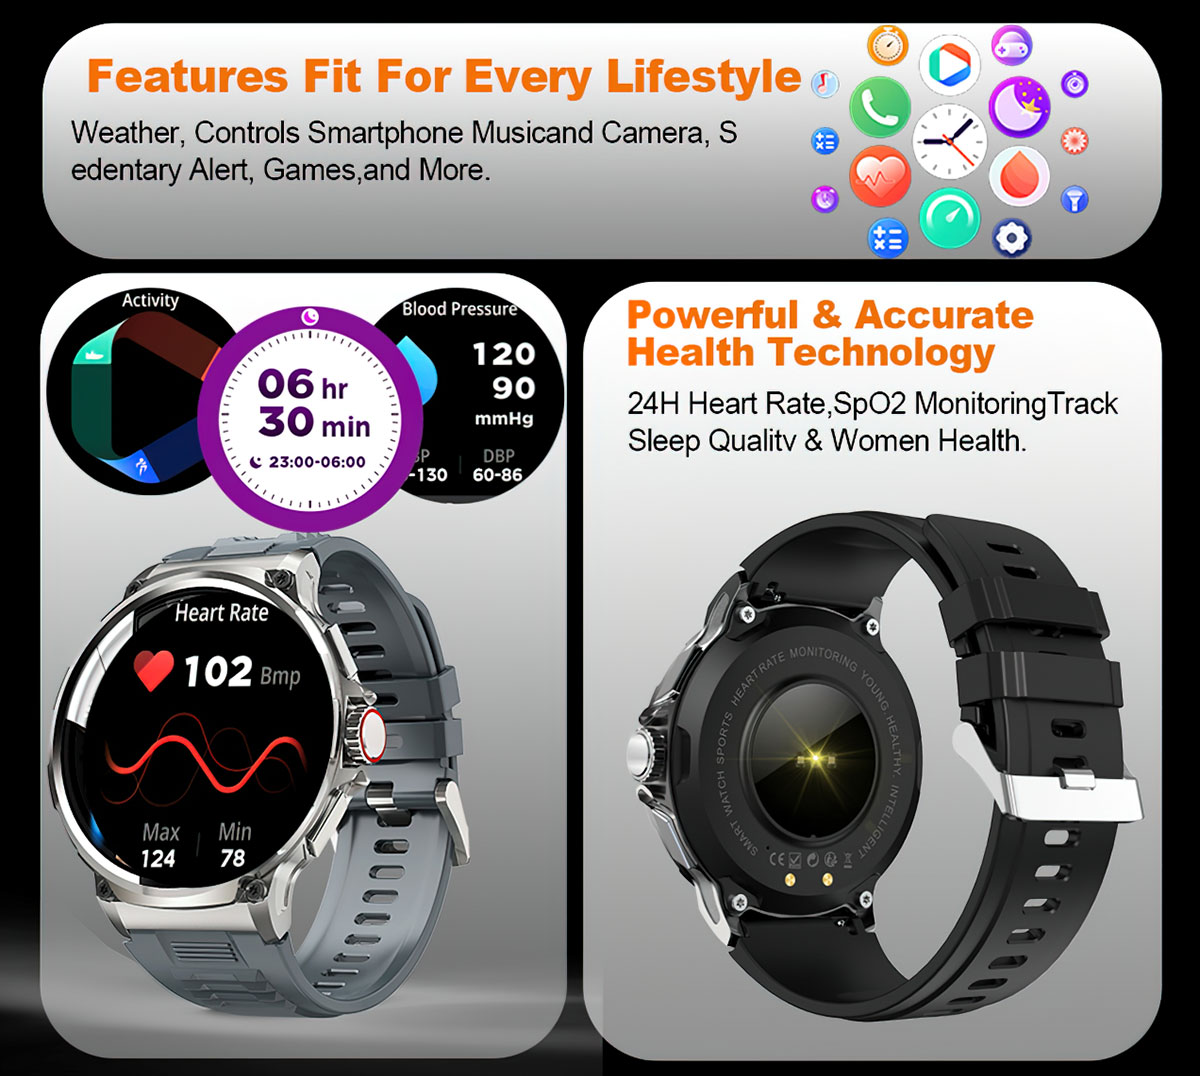 V69 Smartwatch 1.85" Display 400+ Watch Faces 710 mAh Battery Smart Watch